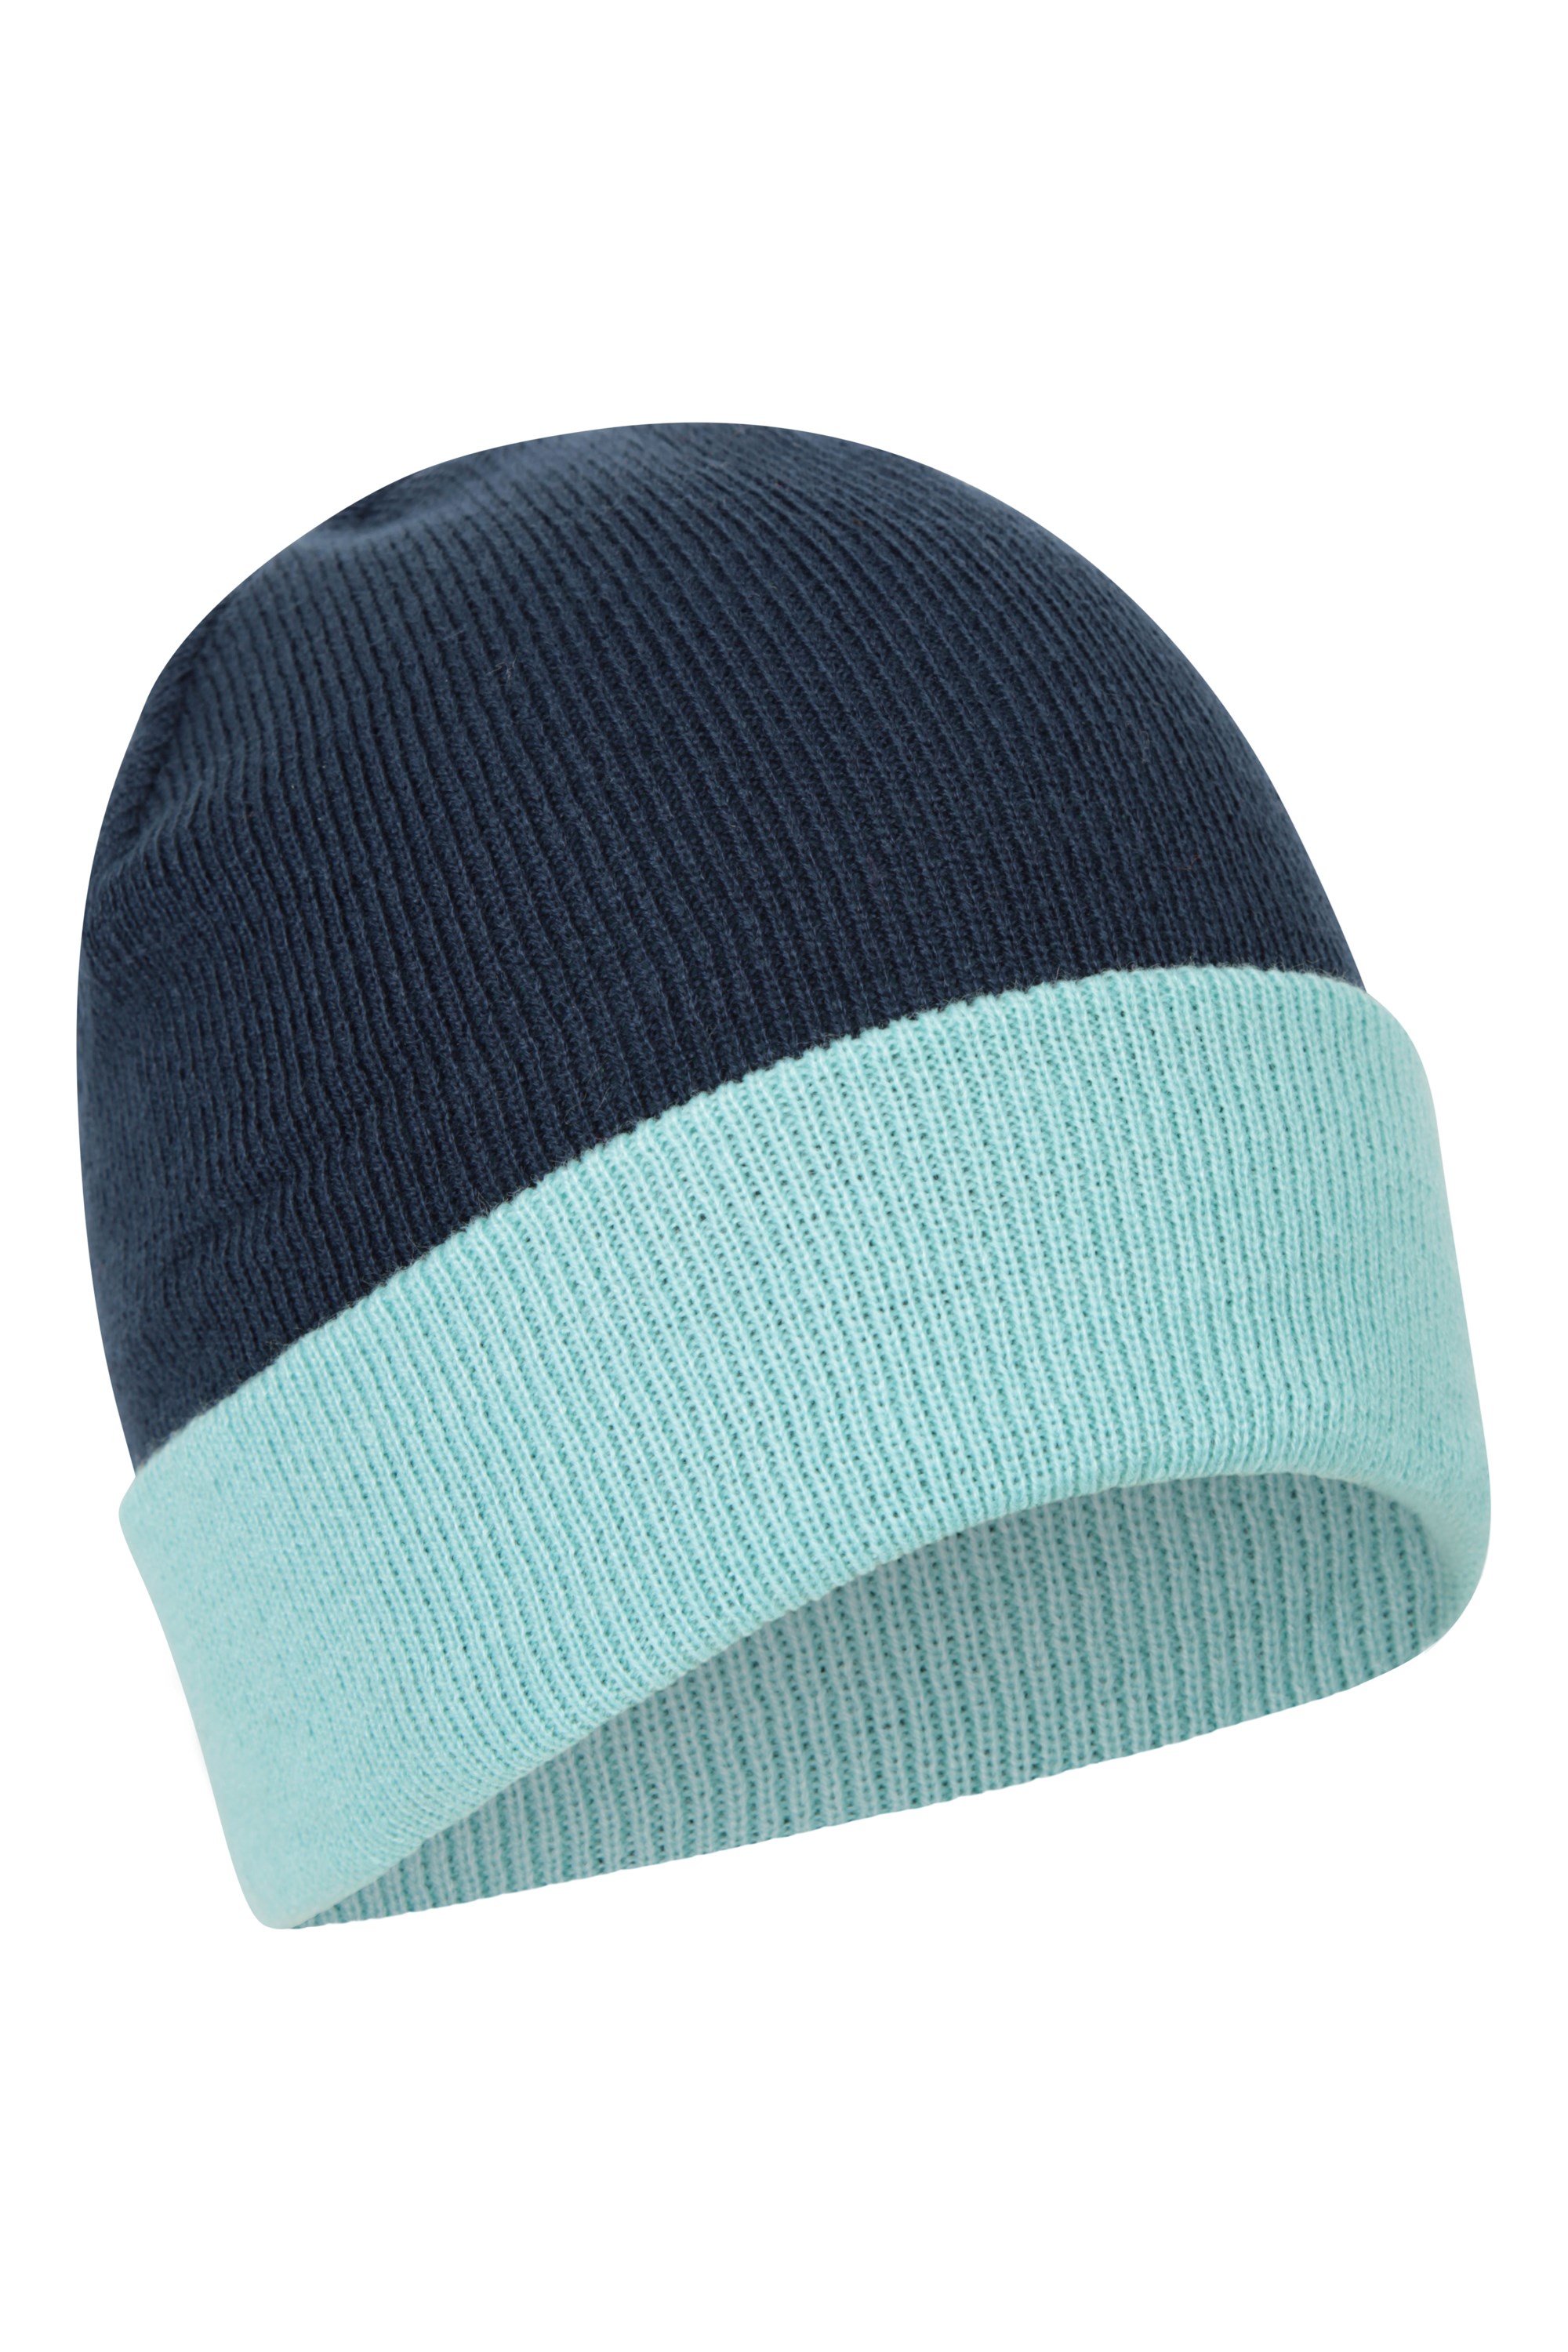 Hikenture Kids Skull Cap Helmet Liner Winter Hat for Boys and Girls Beanie Ski Hat with Thermal Fleece for Snow Sports… 